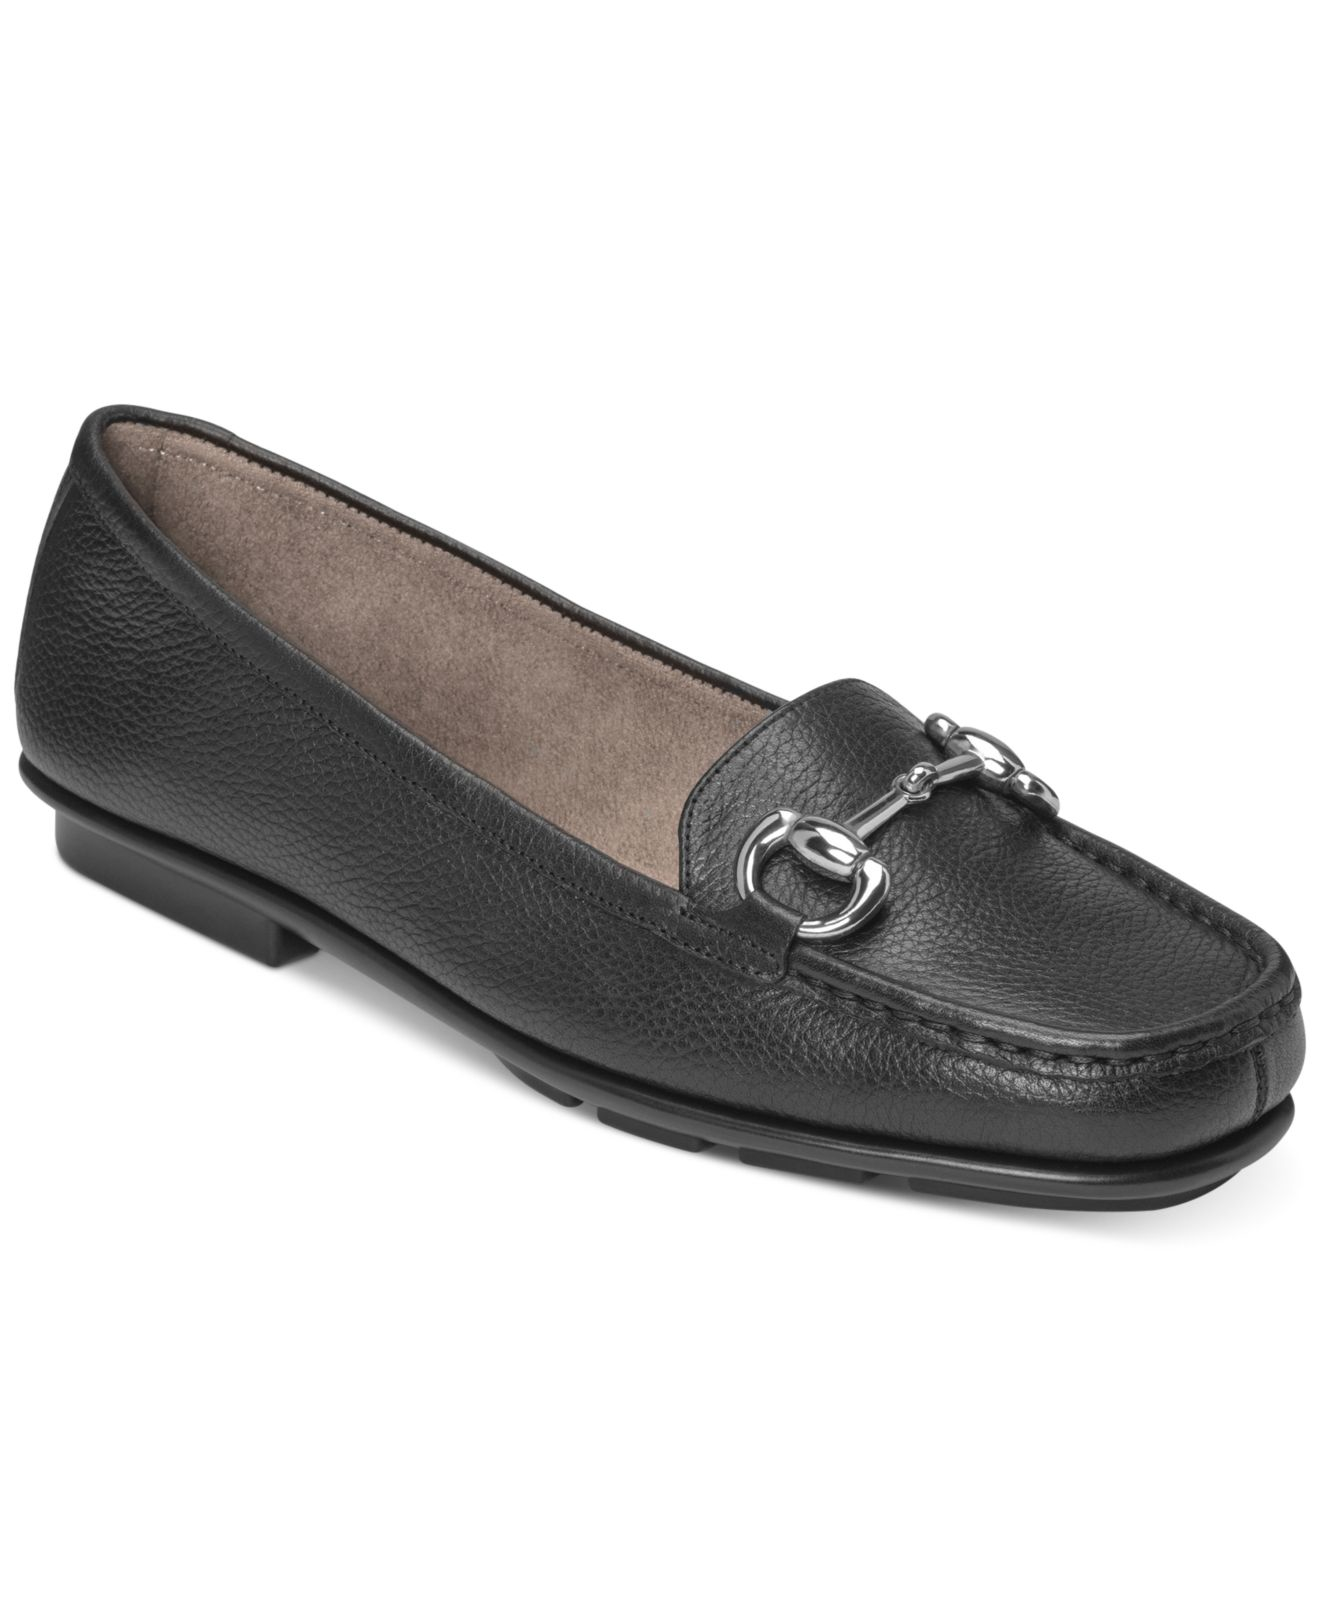 Lyst - Aerosoles Nuwsworthy Loafers in Black